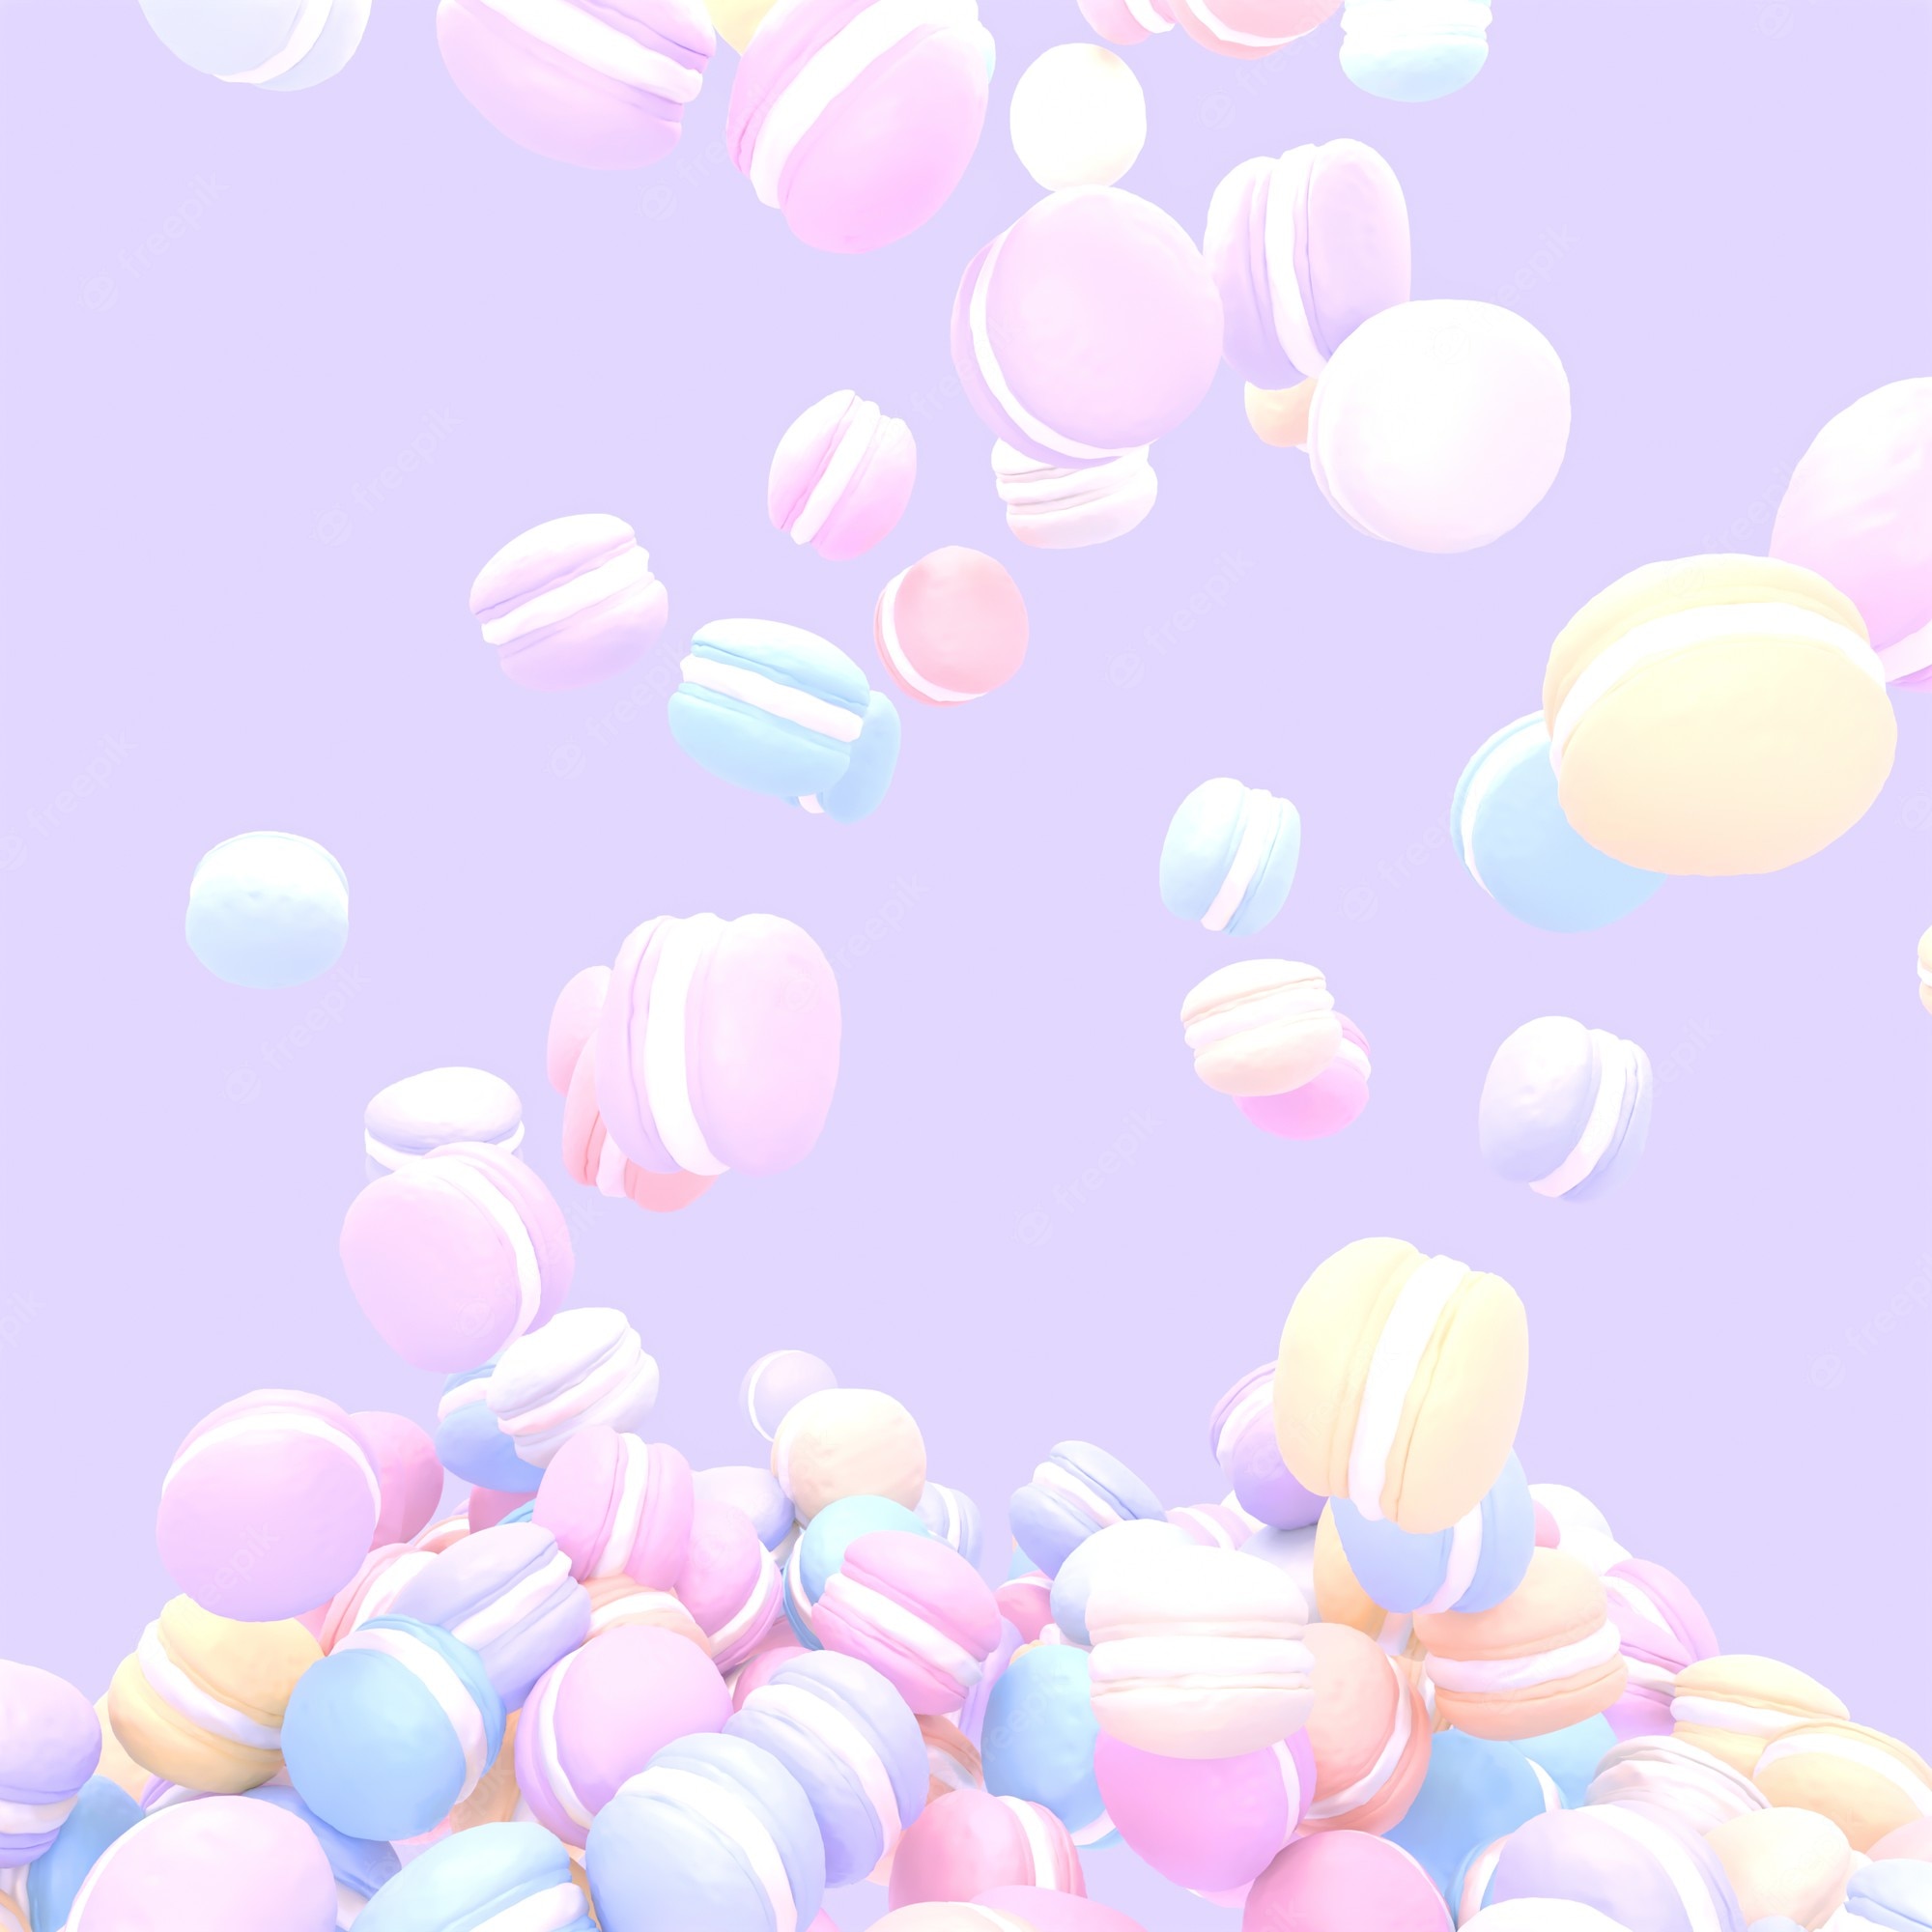 Pastel Cotton Candy Image